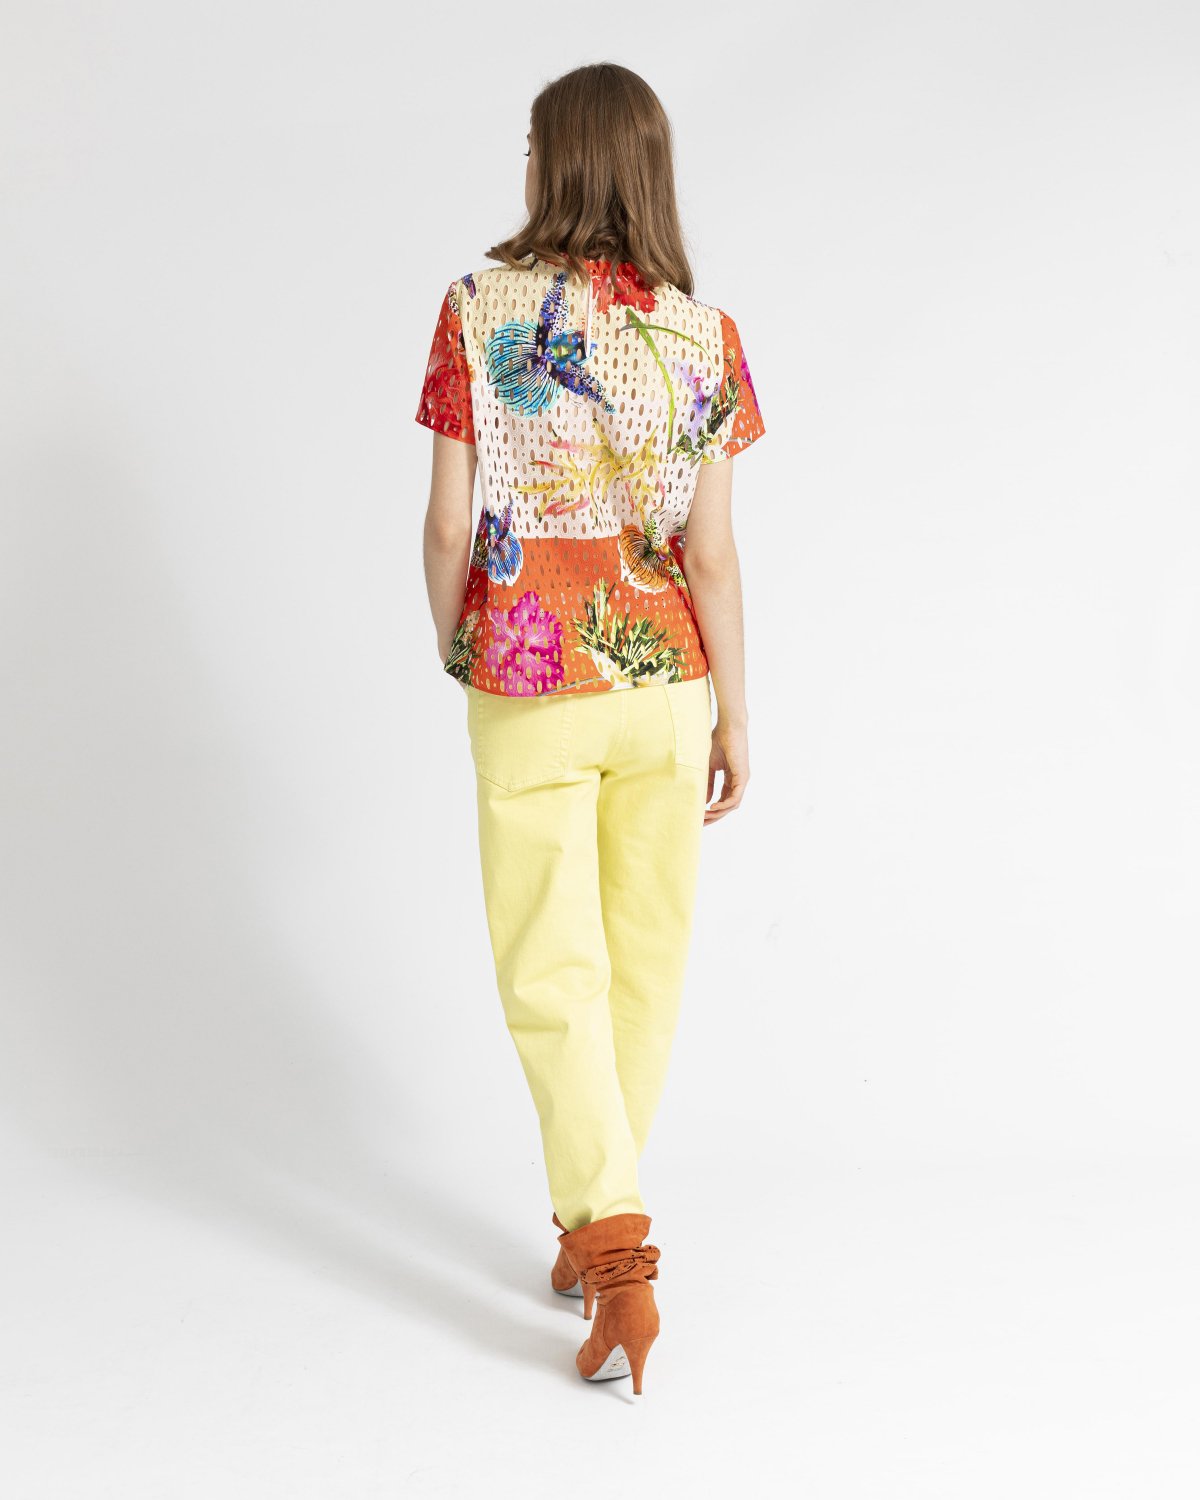 Floral print sangallo lace blouse | Temporary Flash Sale | Genny